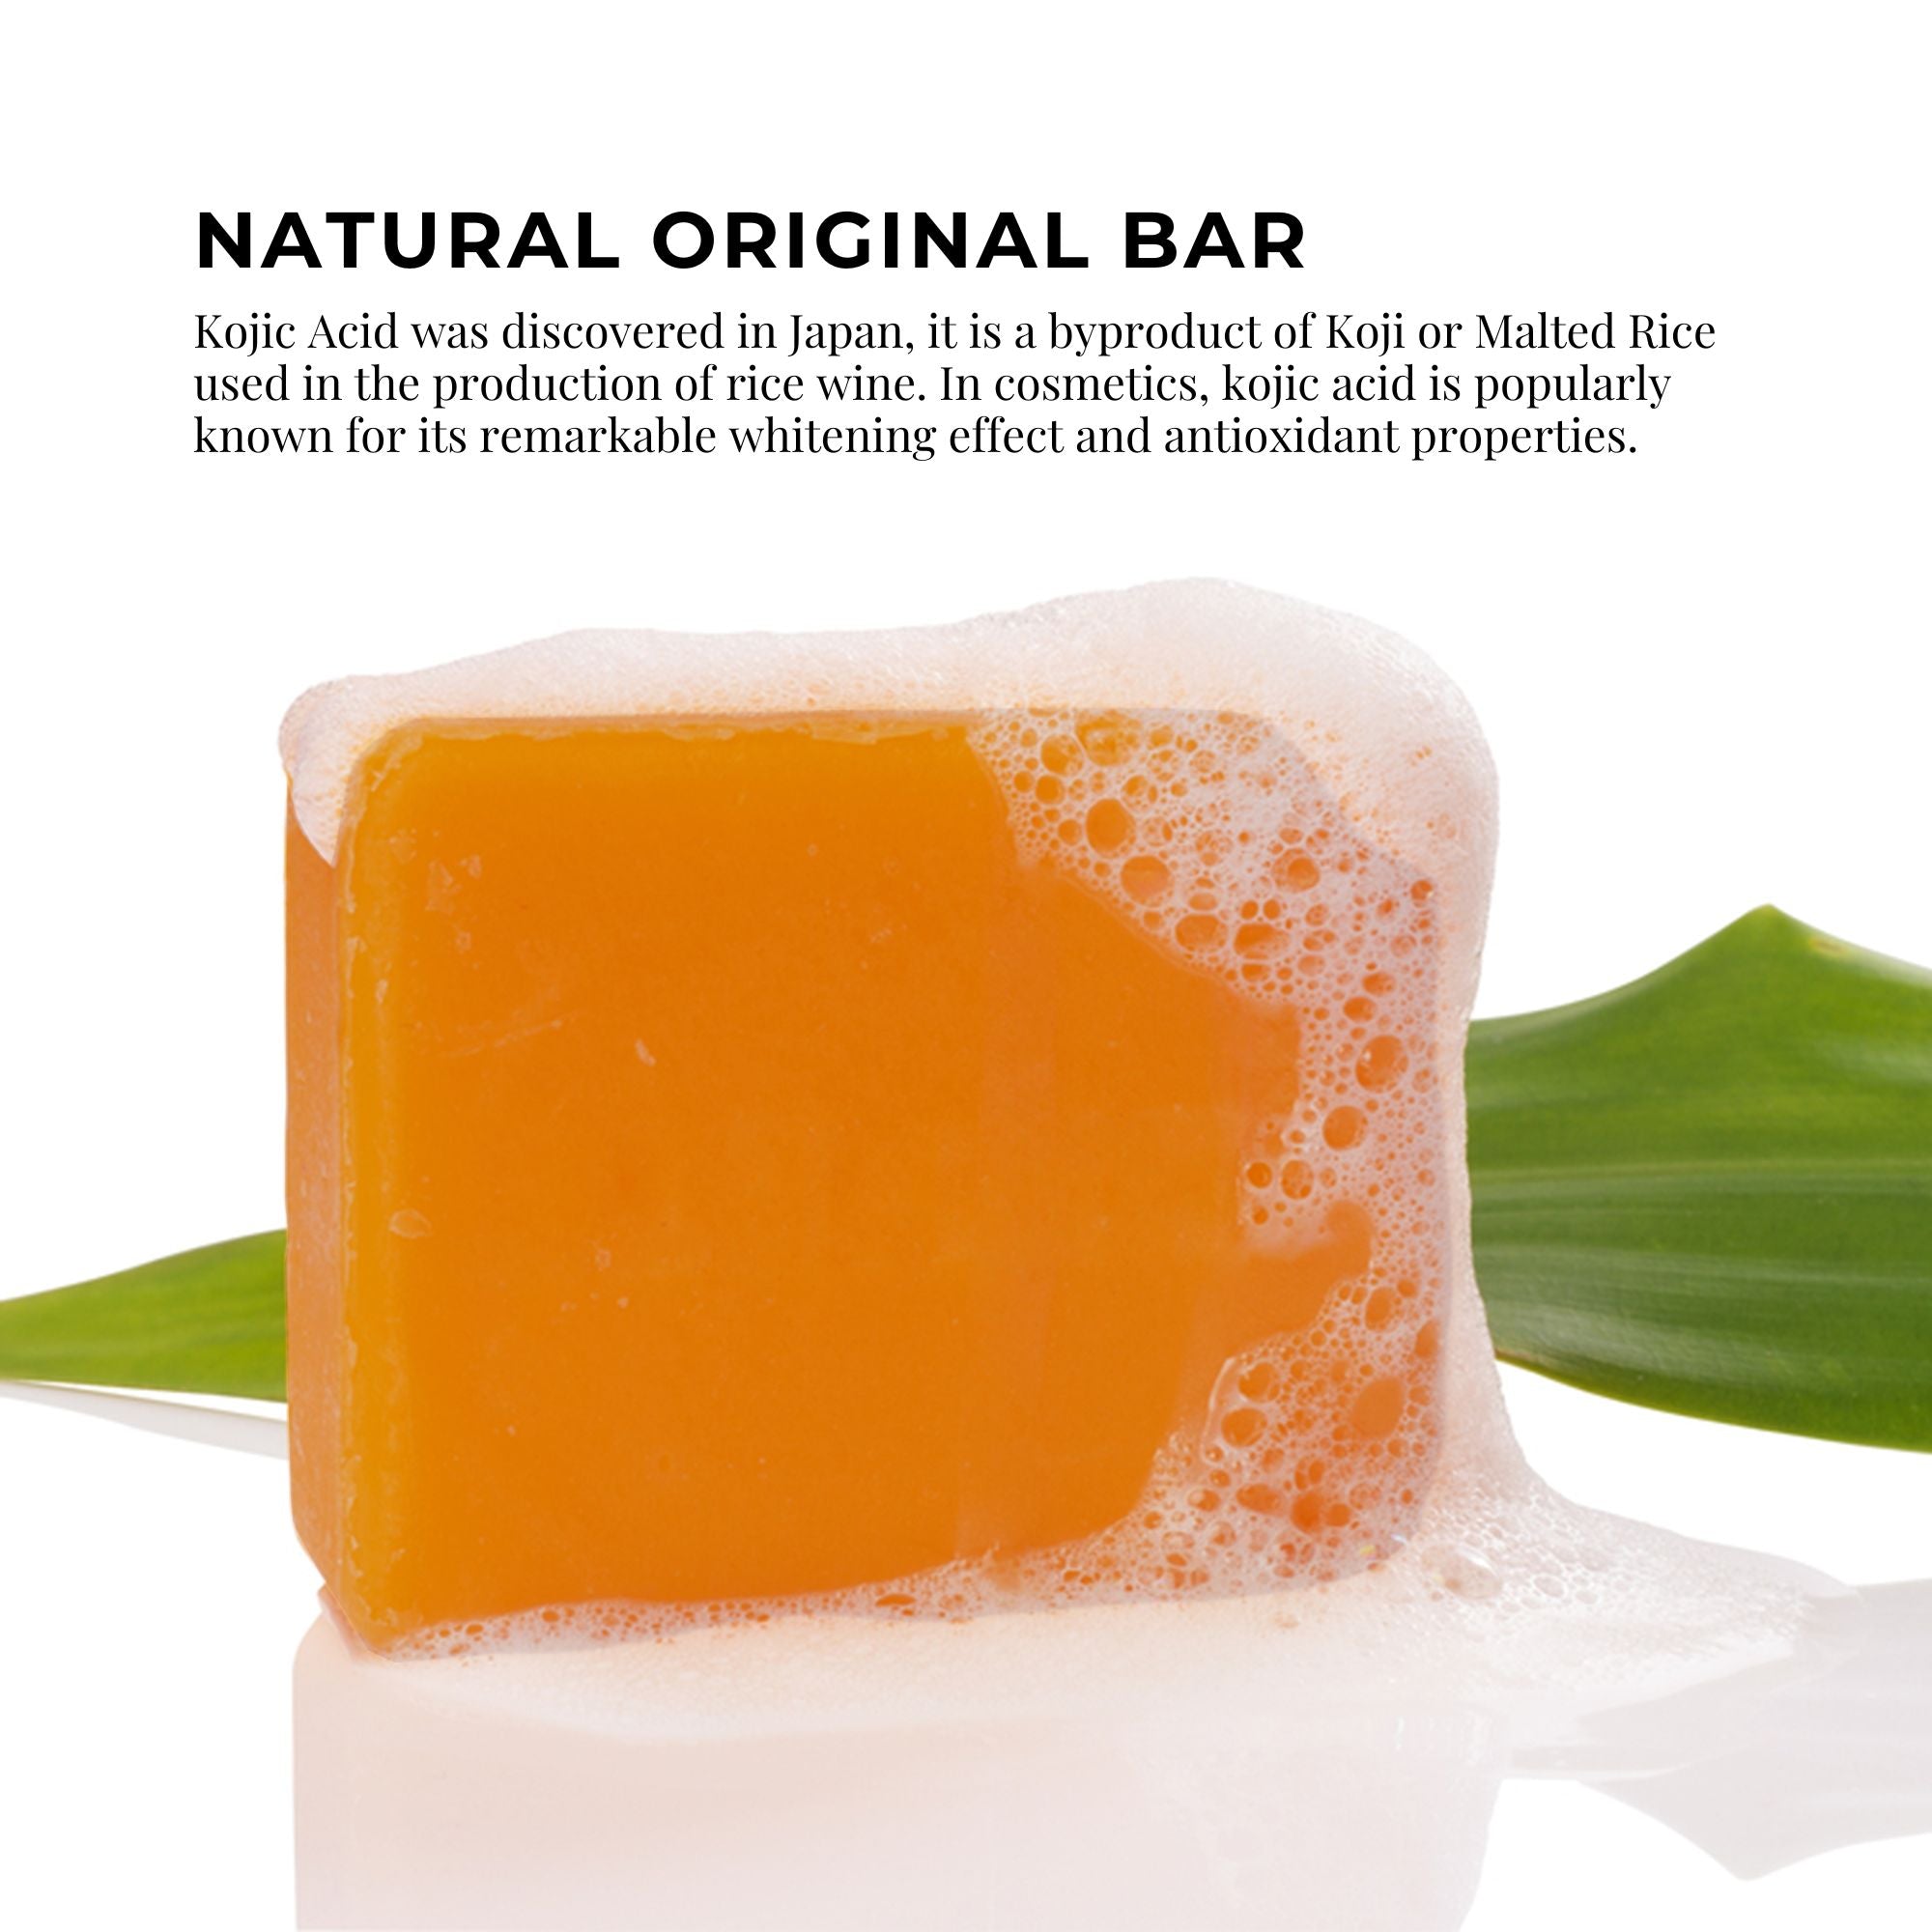 2x  Soap Bars - 135g Skin Lightening Kojic Acid Natural Original Bar